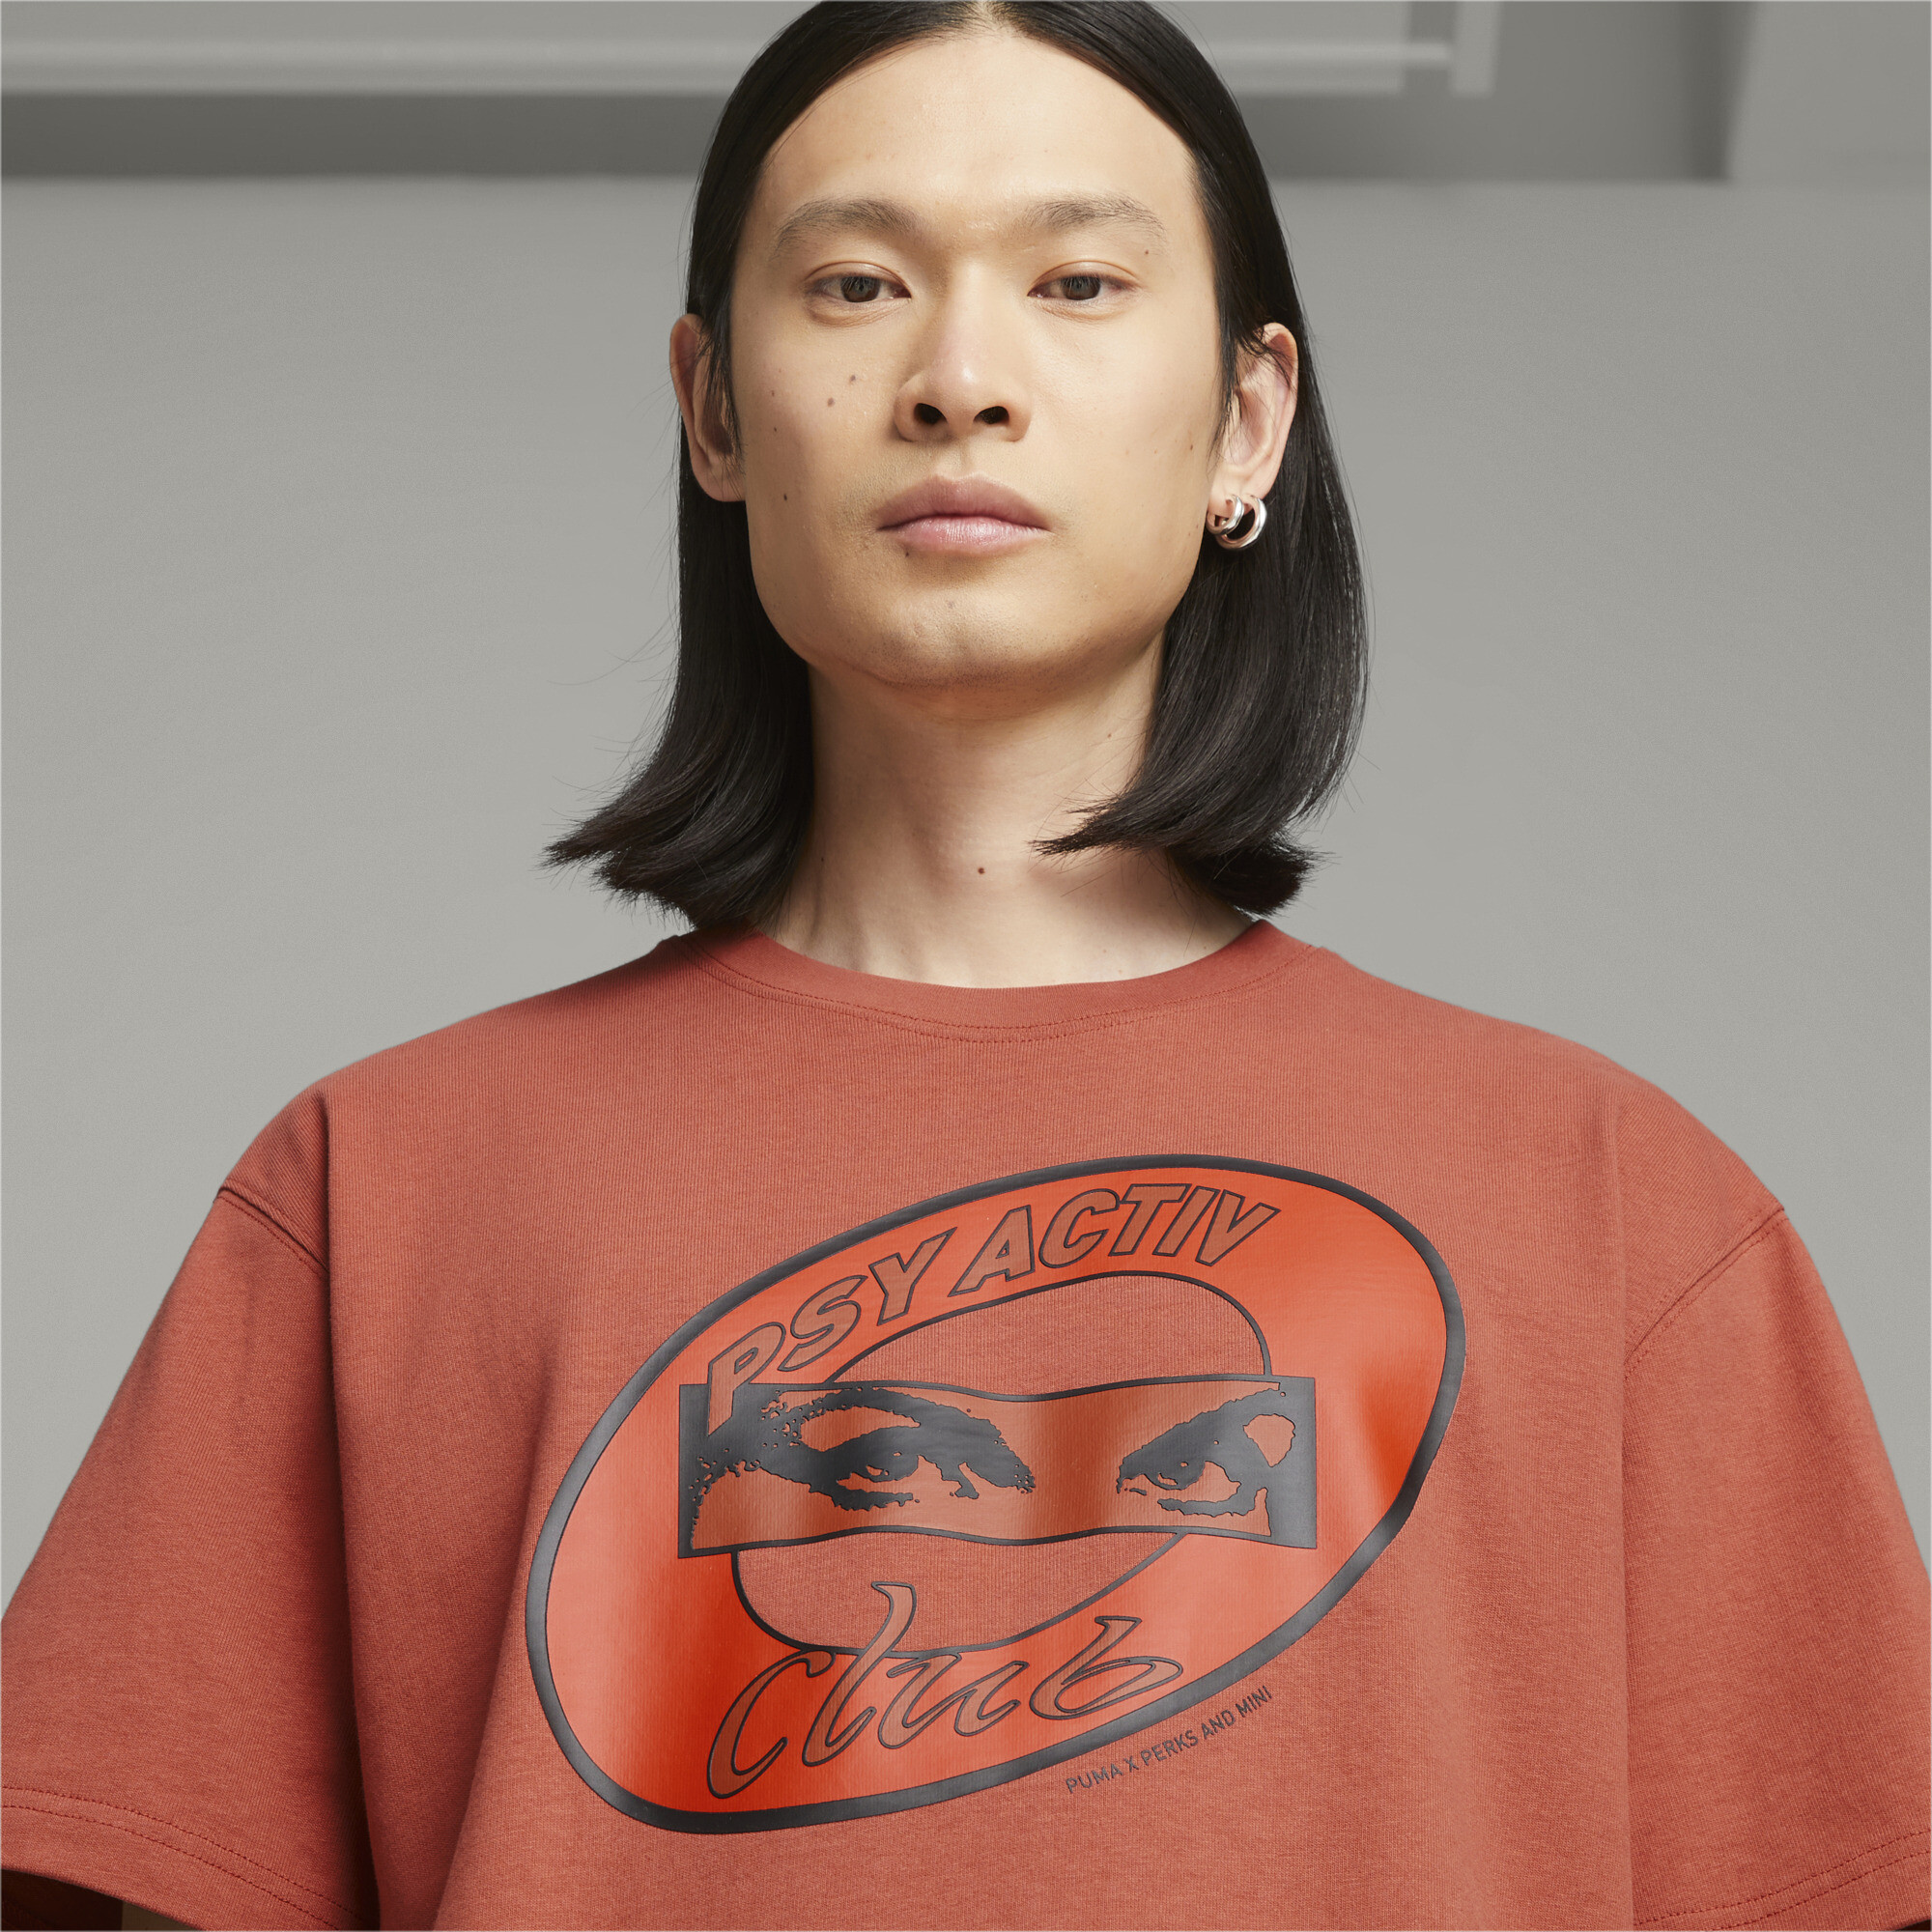 Men's PUMA X PERKS AND MINI Graphic T-Shirt In Brown, Size Medium